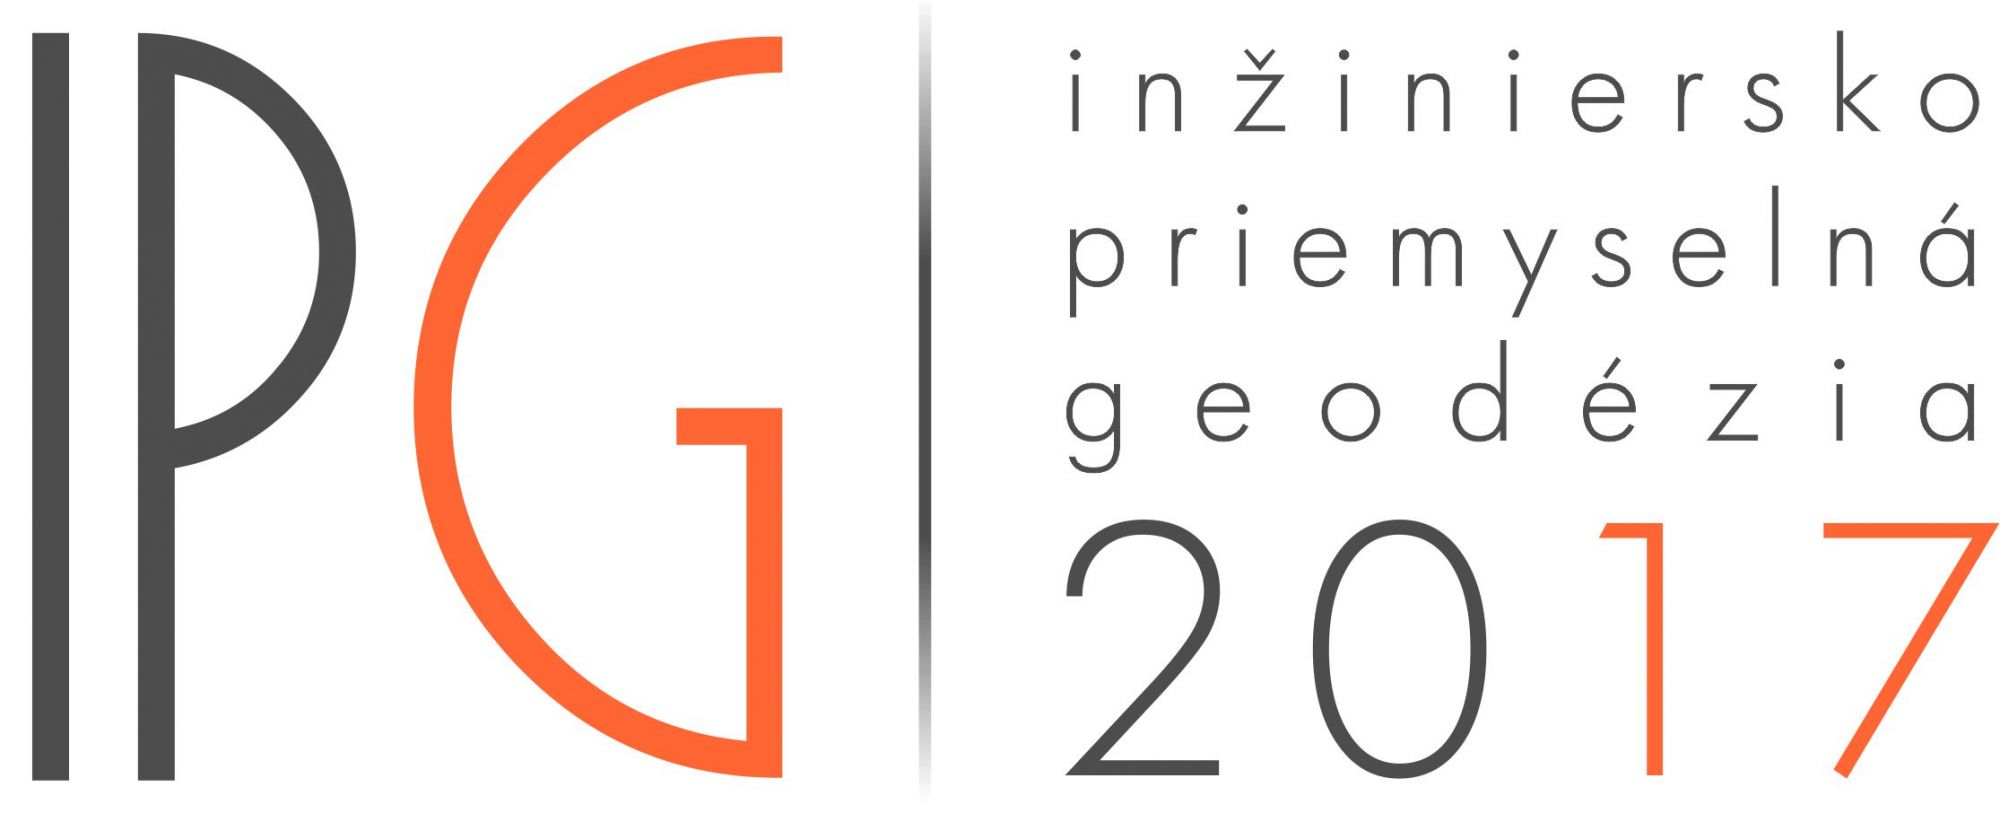 Logo IPG 2017